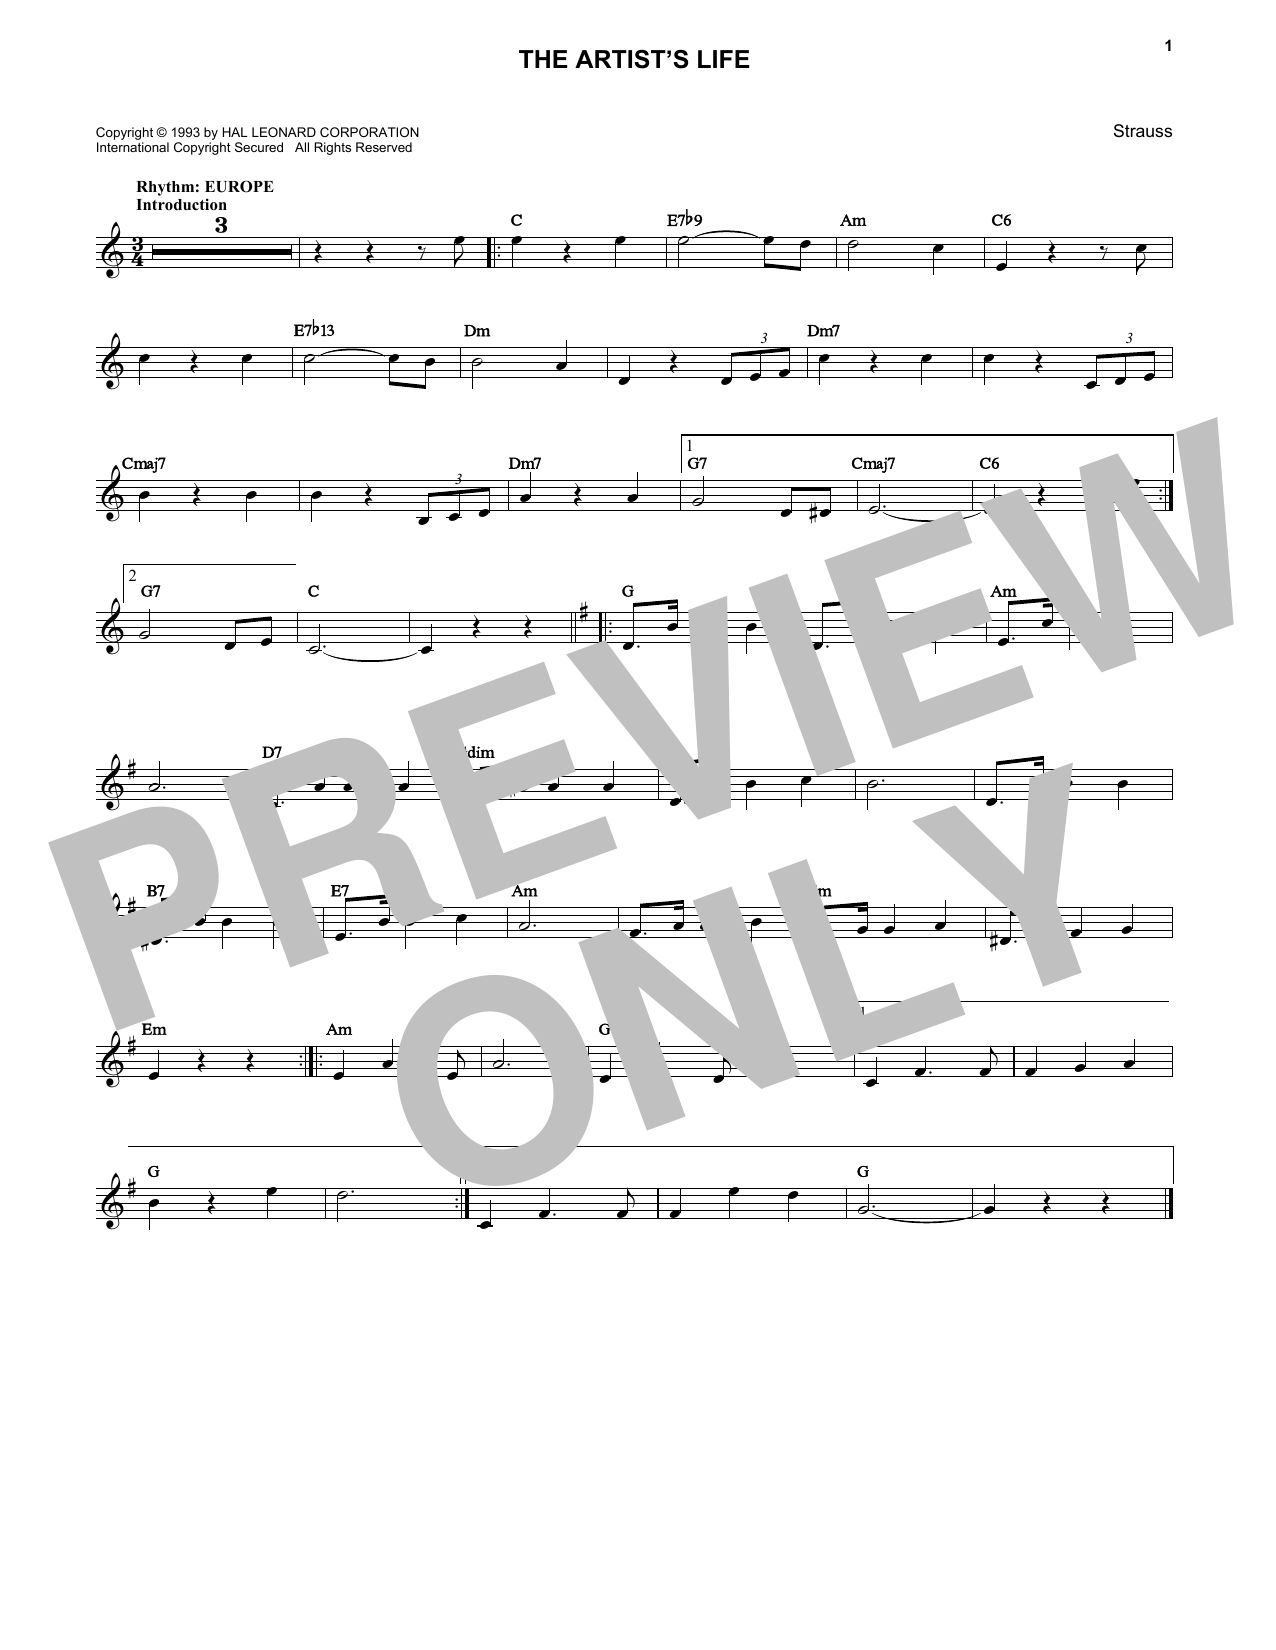 Johann Strauss, Jr. Artist's Life Sheet Music Notes & Chords for Melody Line, Lyrics & Chords - Download or Print PDF